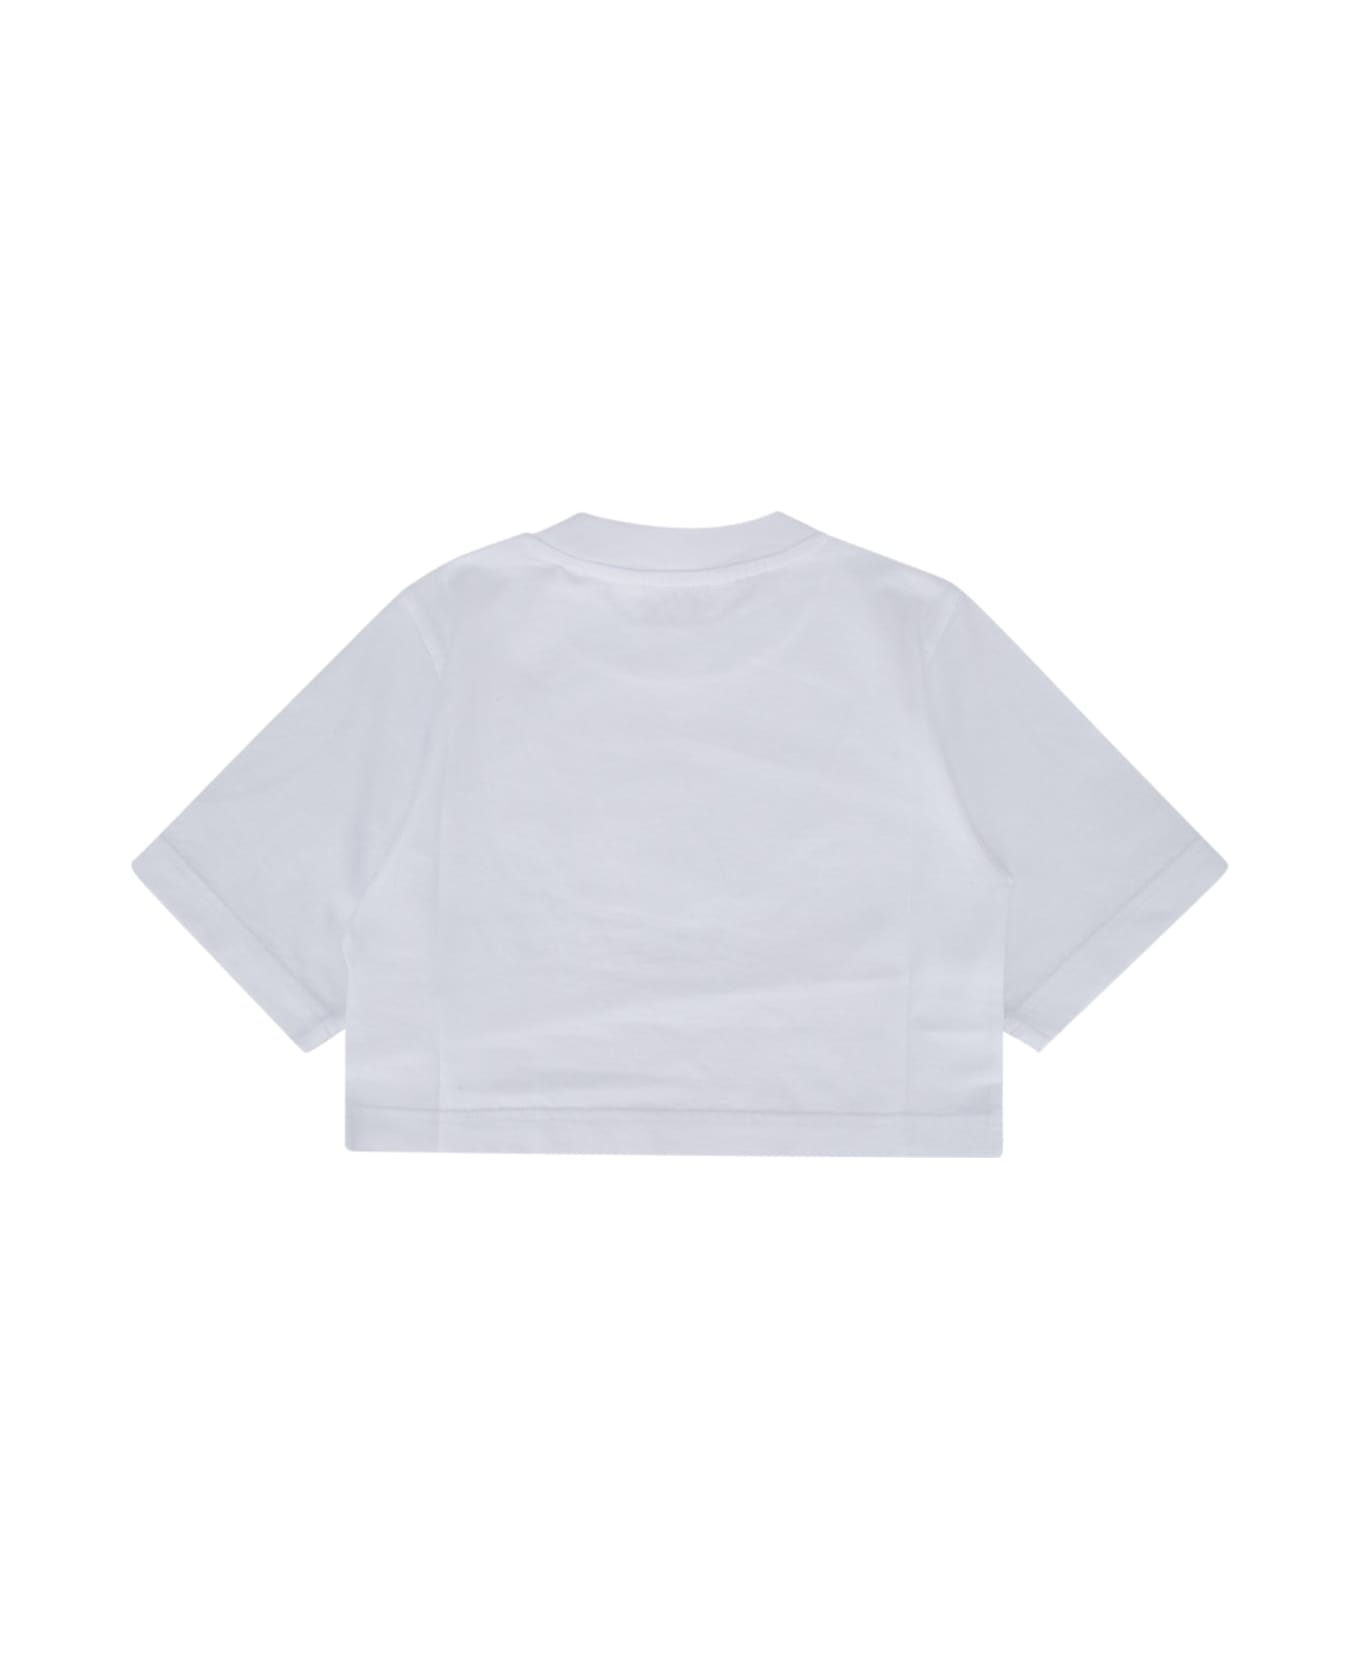 Palm Angels T-shirt - WHITEBROWN